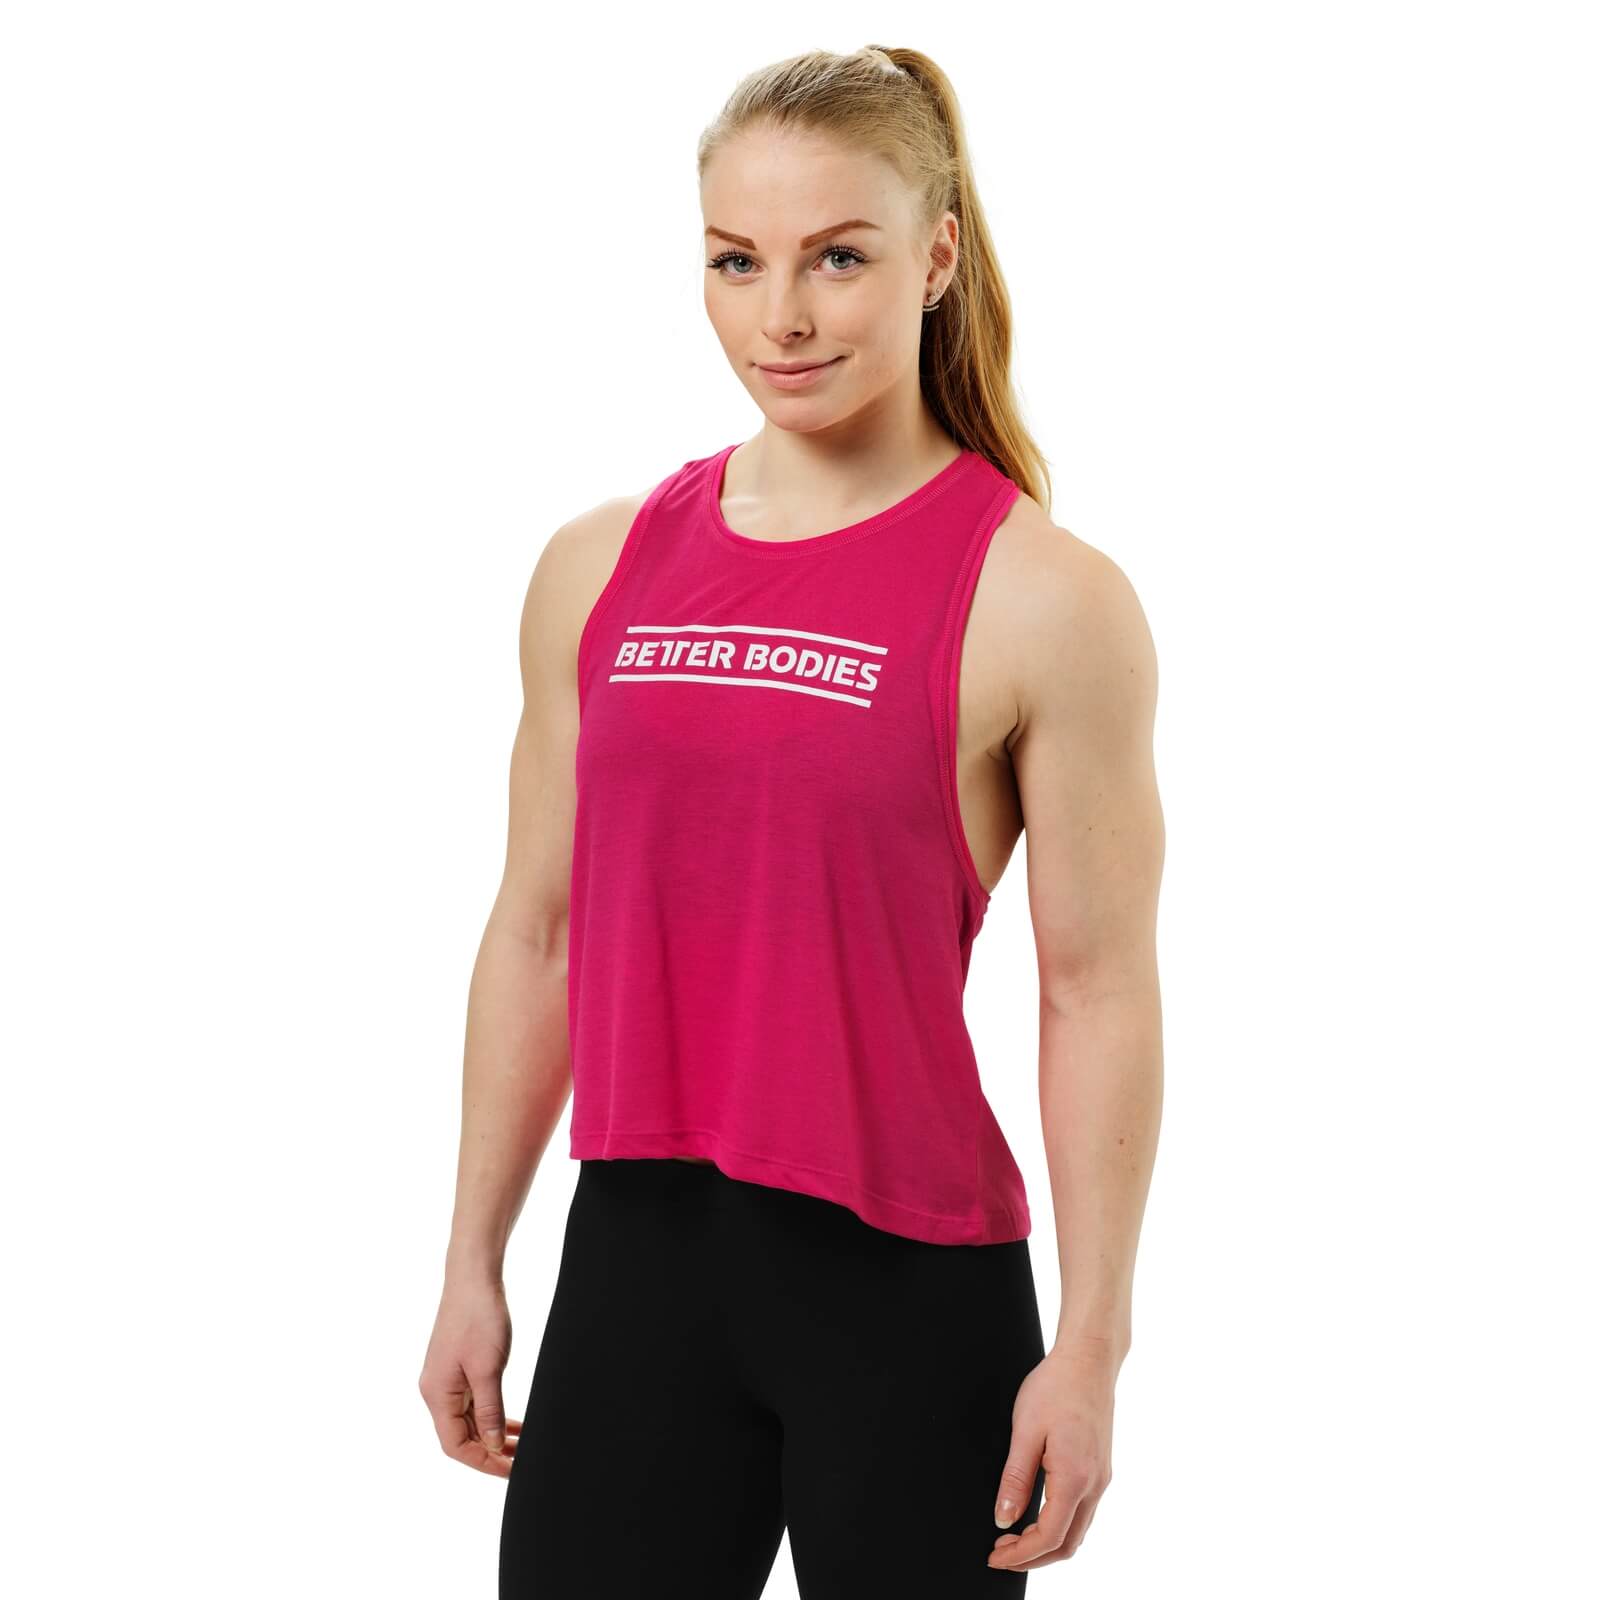 Kolla in Deep Cut Top, hot pink, Better Bodies hos SportGymButiken.se